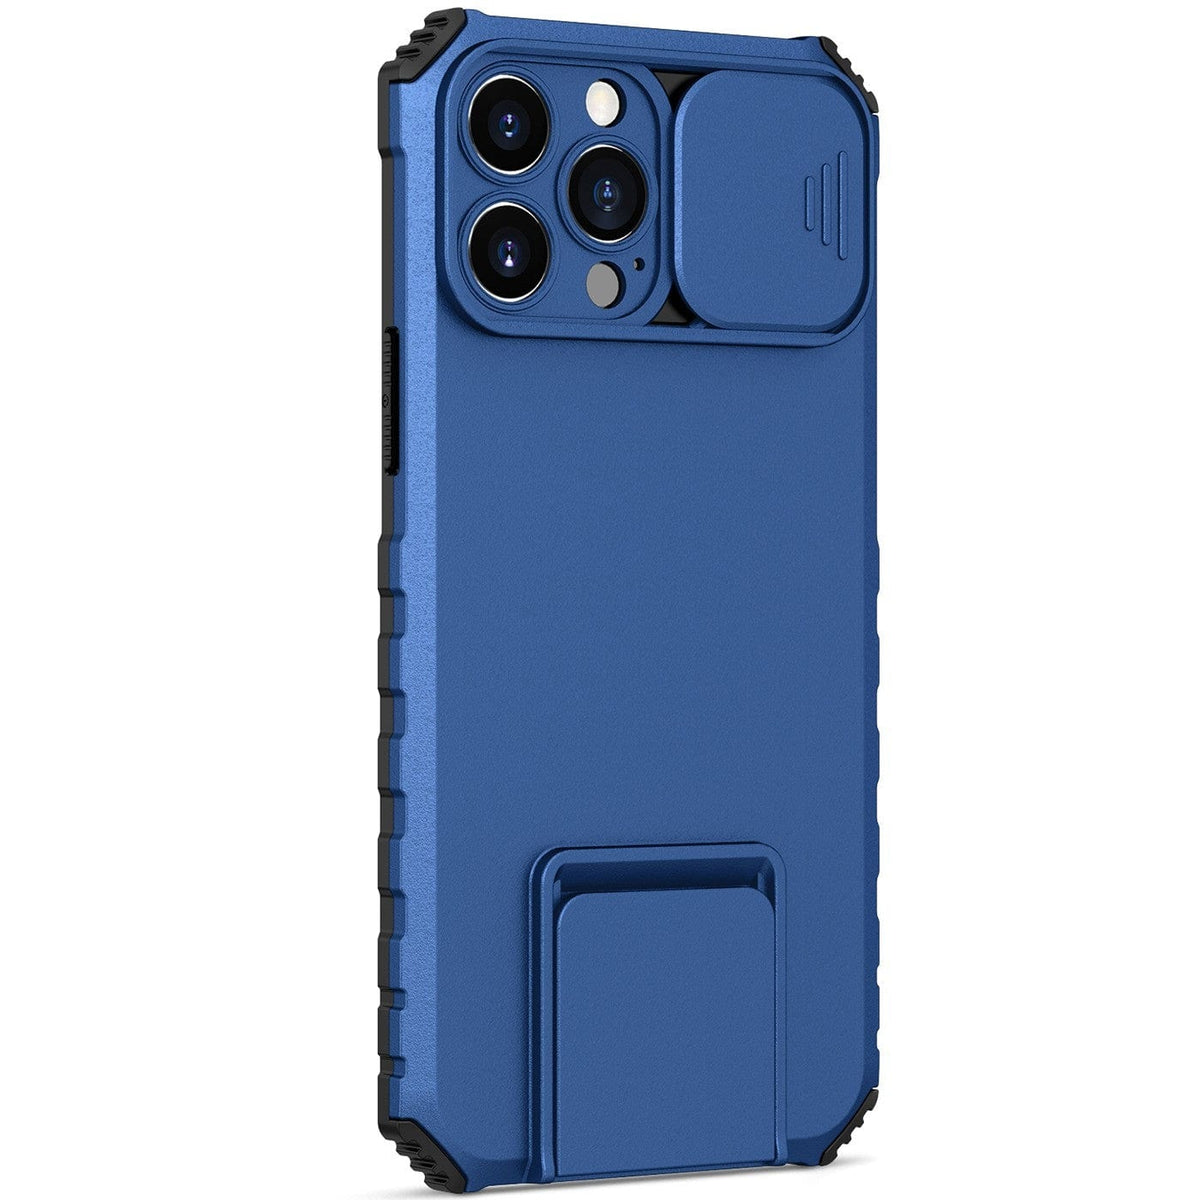 Husa Defender cu Stand pentru Samsung Galaxy A33 5G, Albastru, Suport reglabil, Antisoc, Protectie glisanta pentru camera